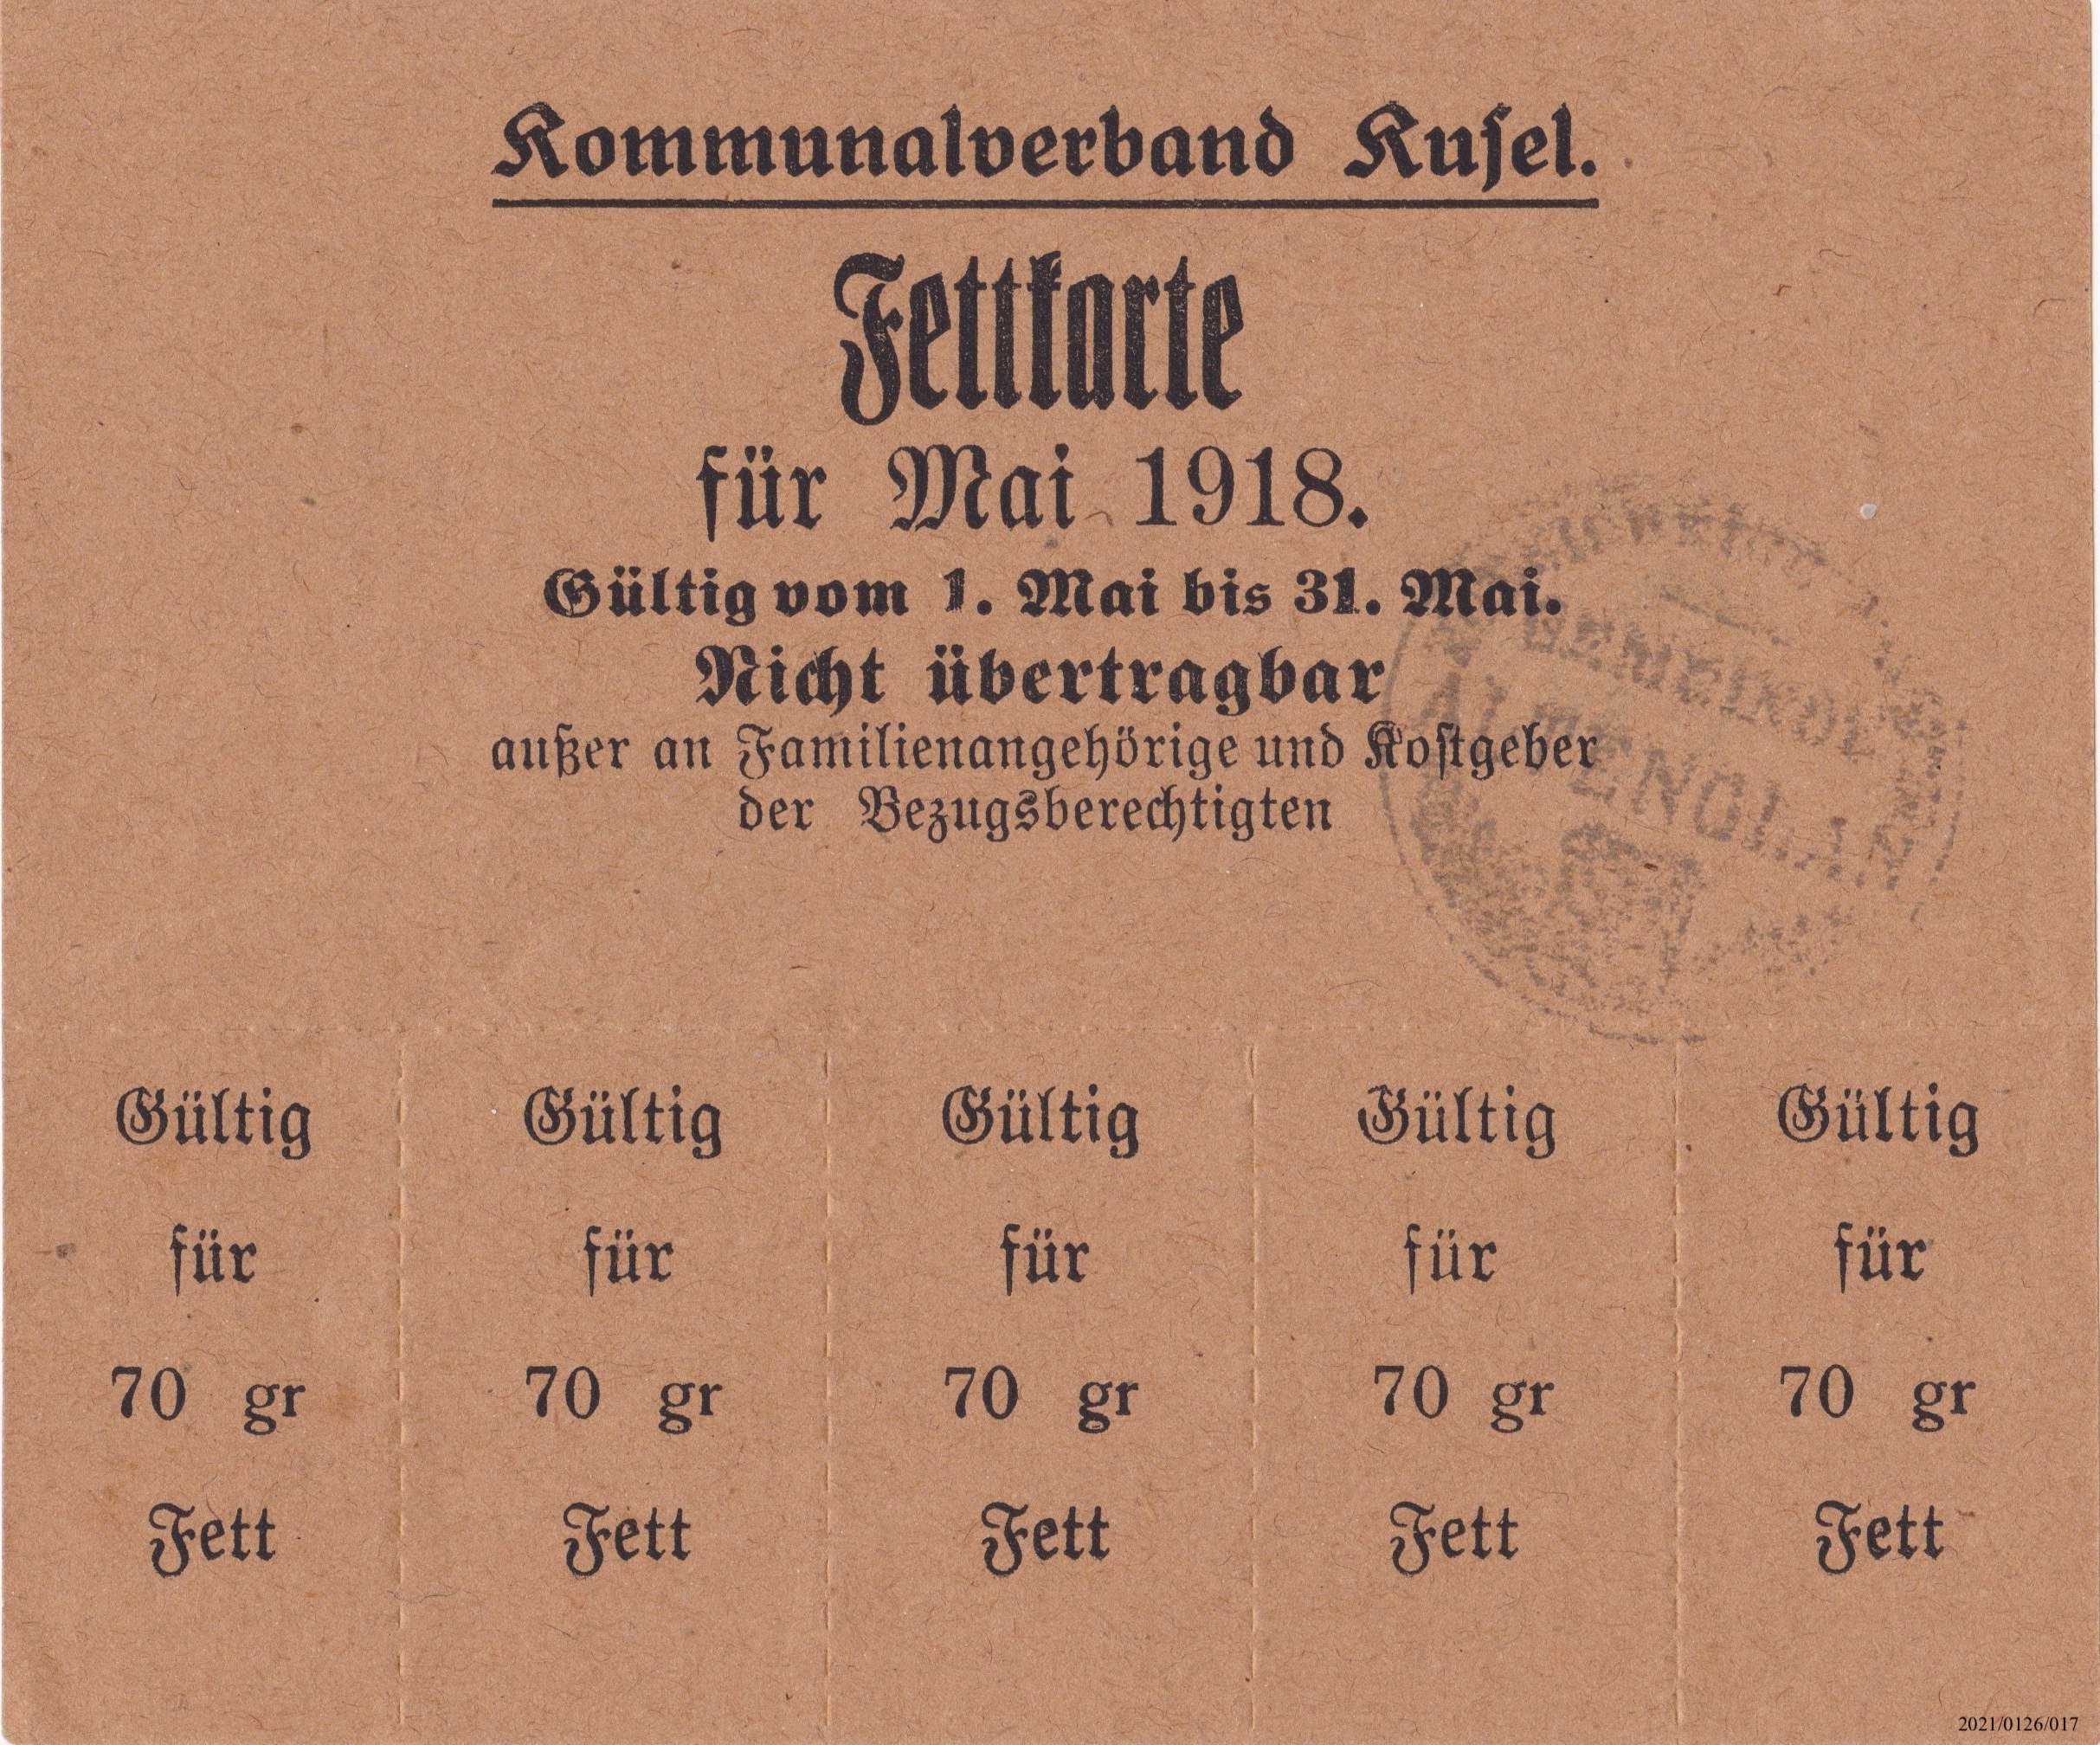 Fettkarte Kommunalverband Kusel 1918 (Museumsgesellschaft Bad Dürkheim e. V. CC BY-NC-SA)